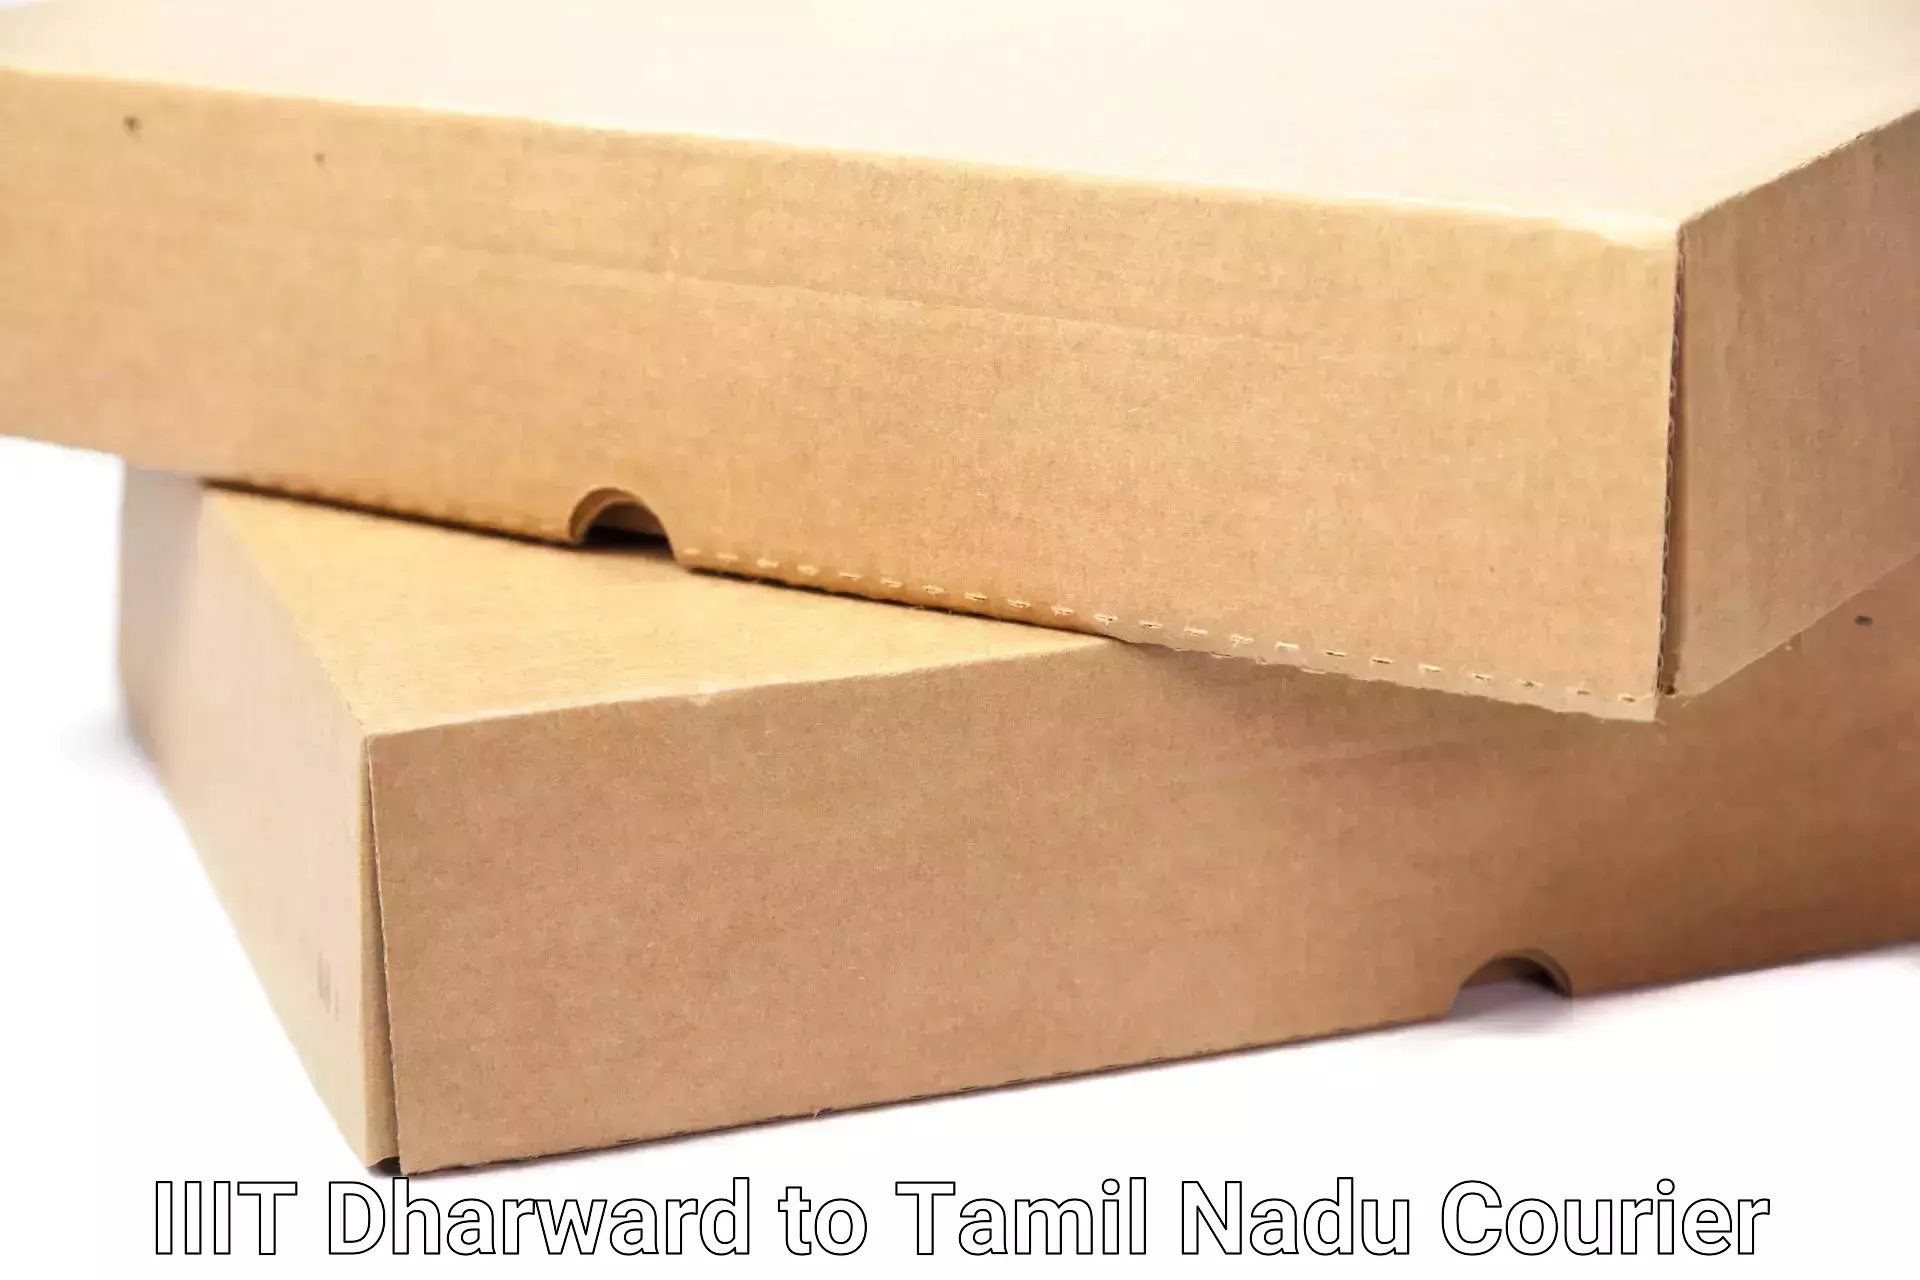 Home goods moving company IIIT Dharward to Tamil Nadu